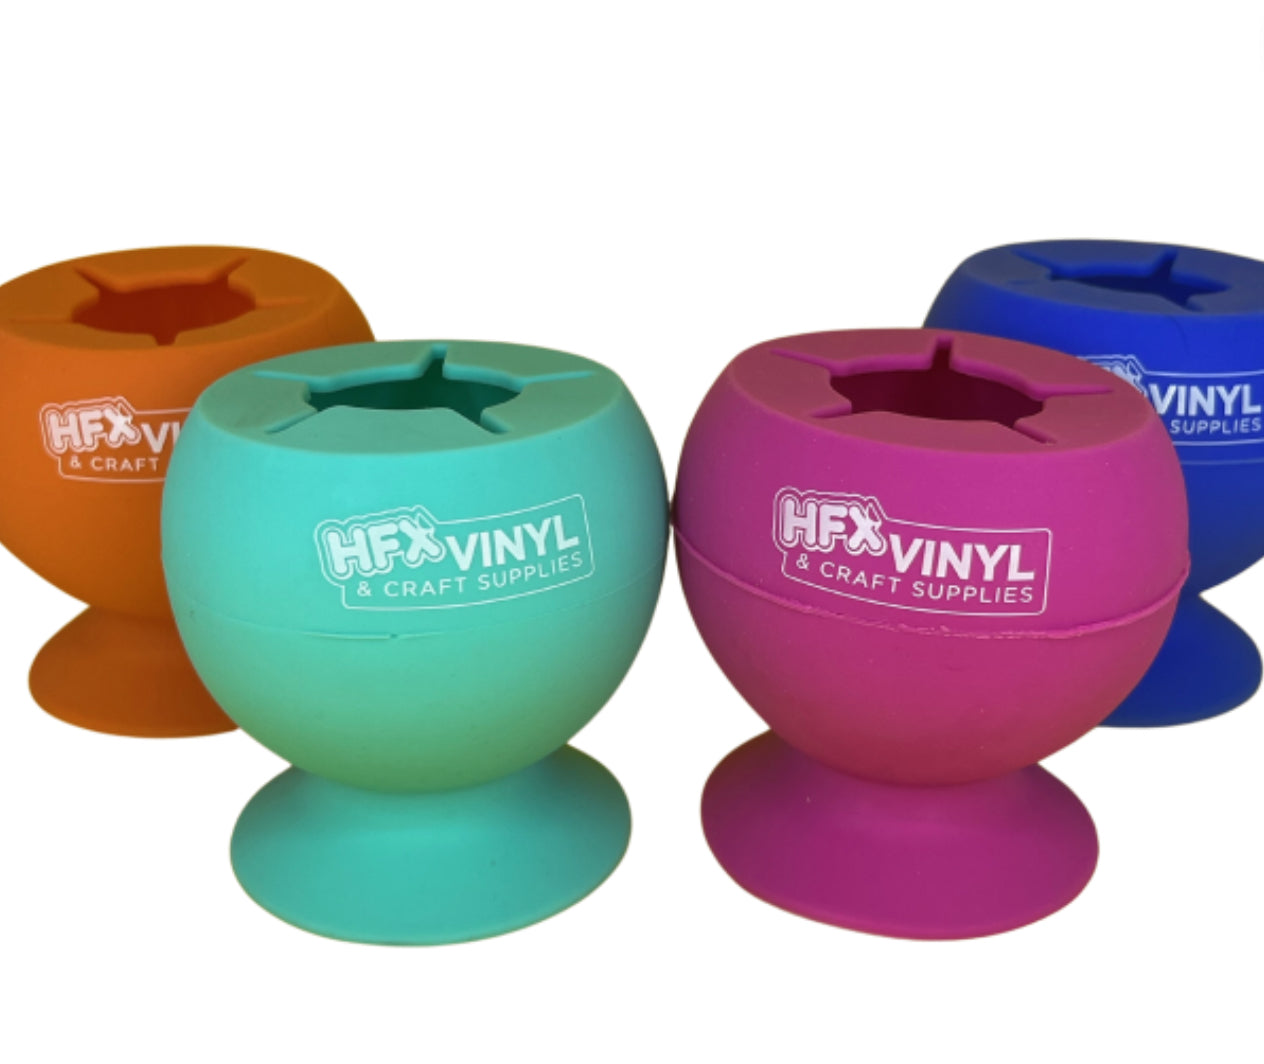 HFX Weeding Scrap Collector – HFX Vinyl & Craft Supplies